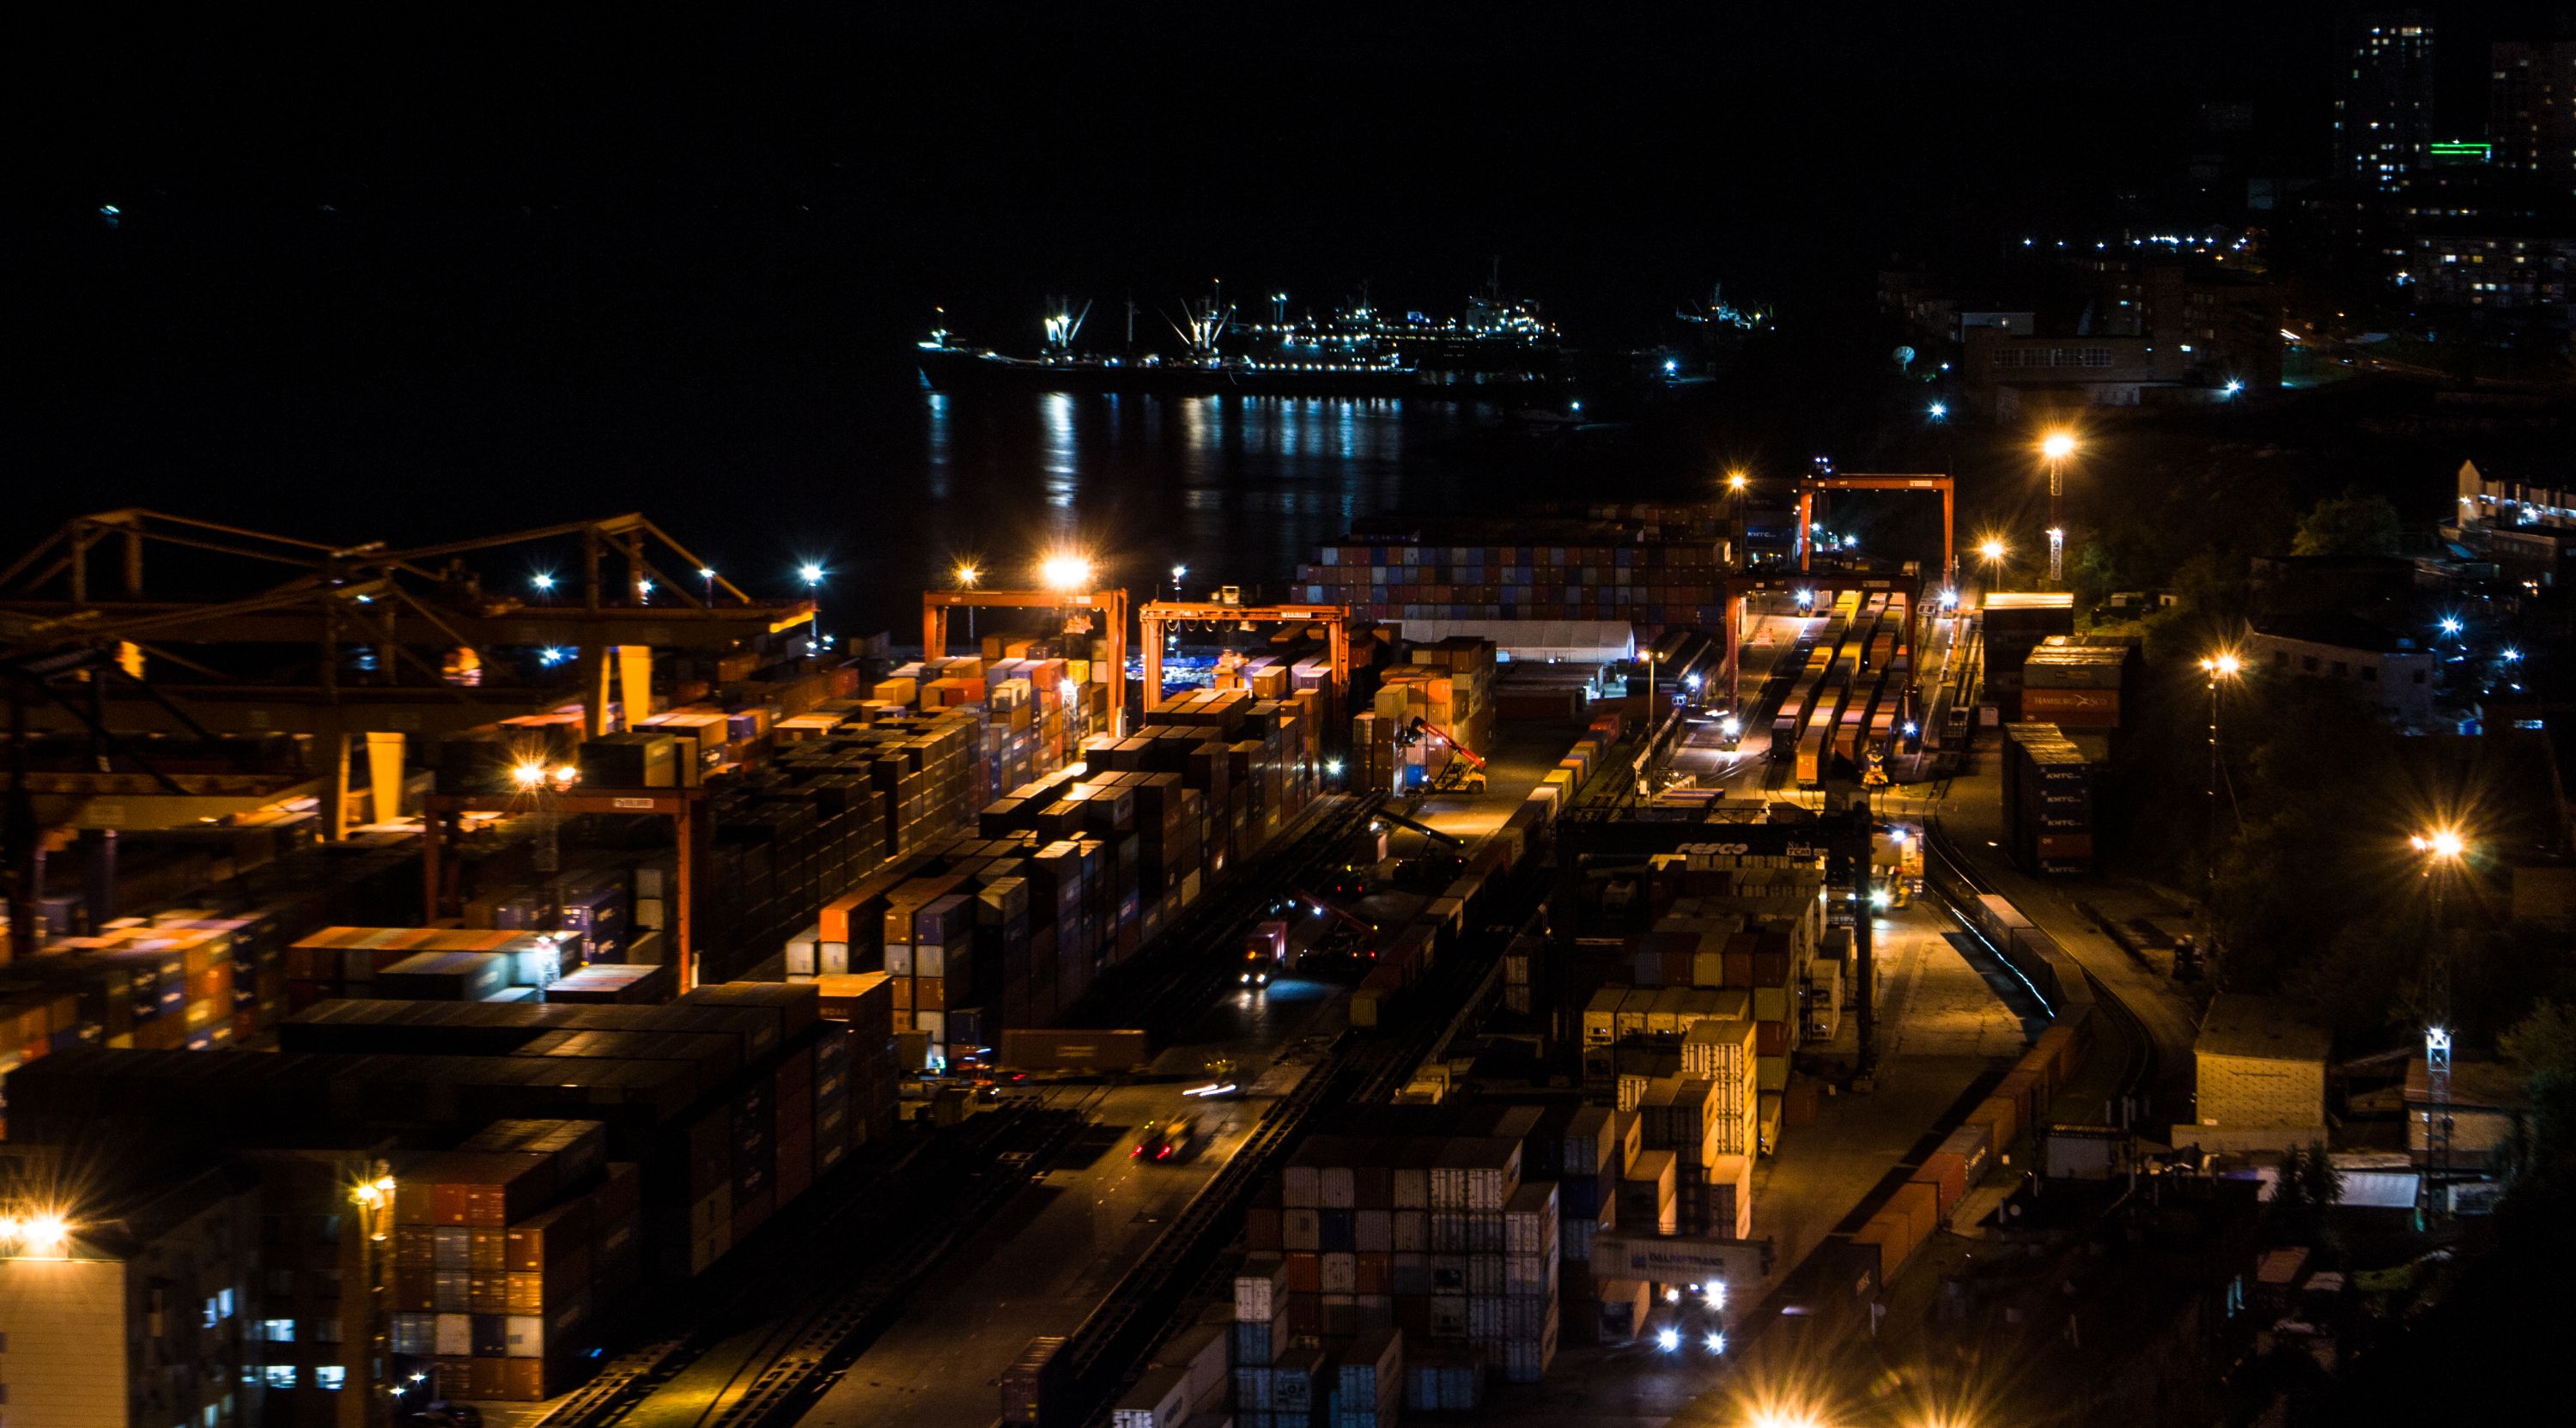 Порт Владивостока